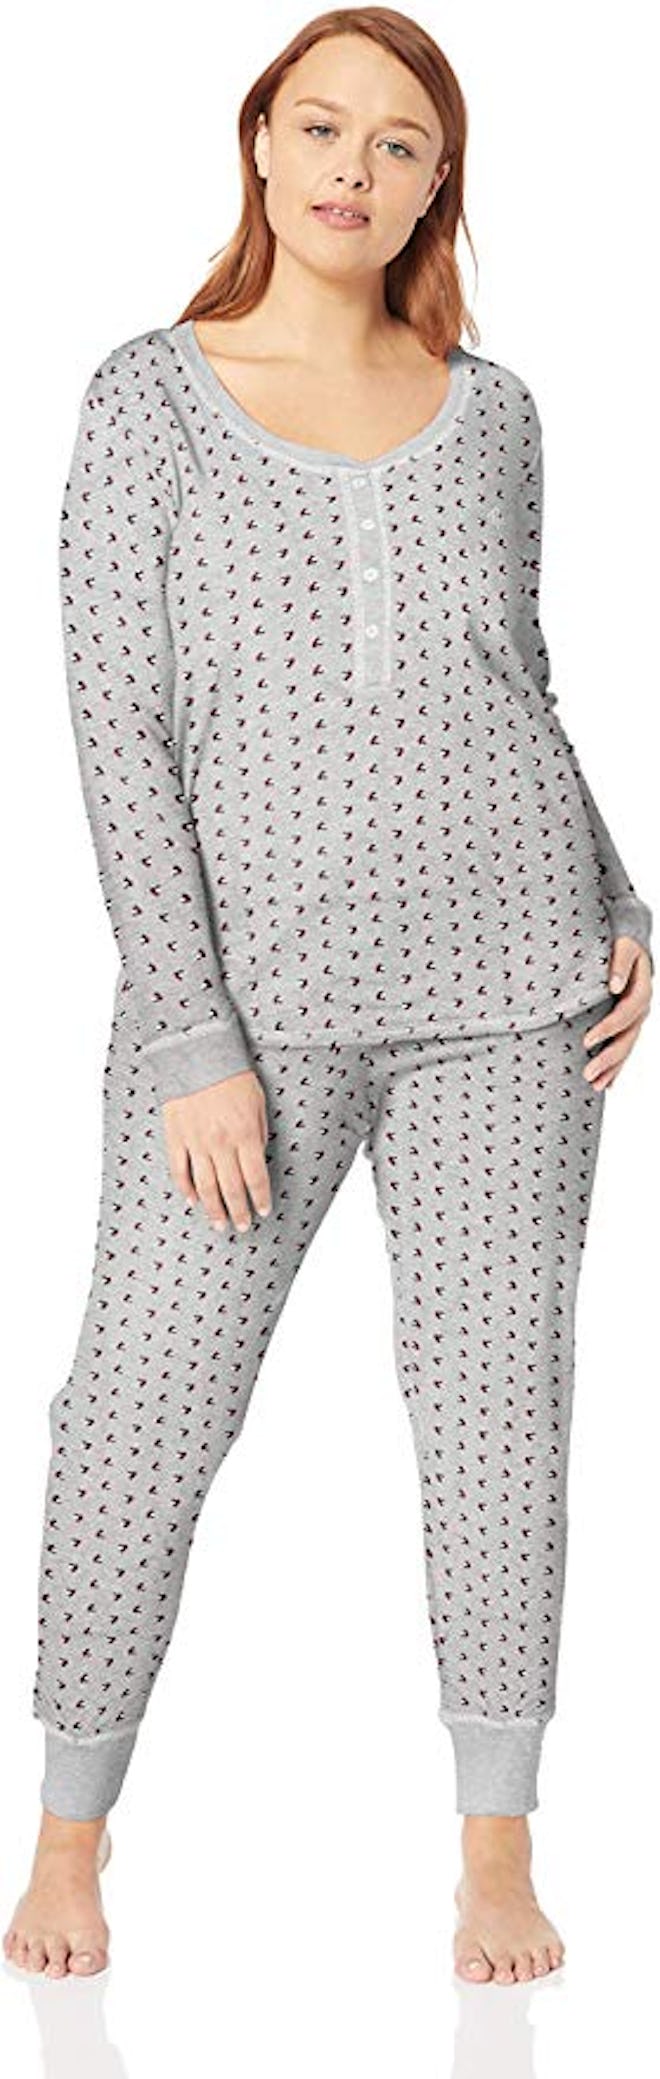 Tommy Hilfiger Thermal Pajama Set